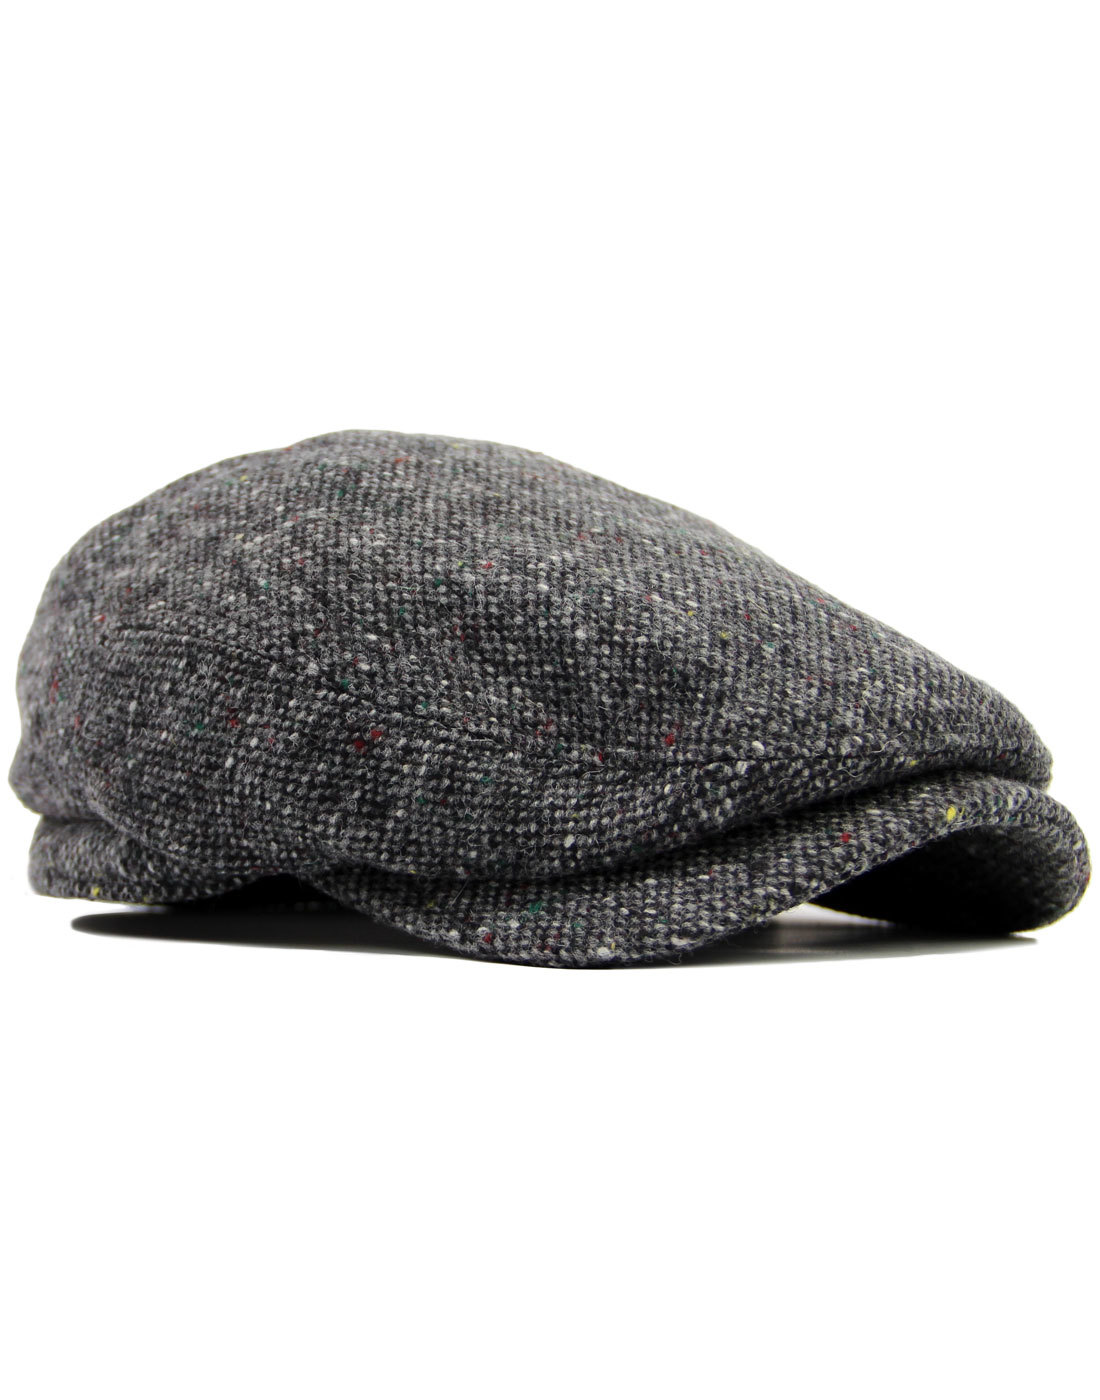 FAILSWORTH Donegal Windsor Retro 60s Mod Wool Flat Cap in Grey